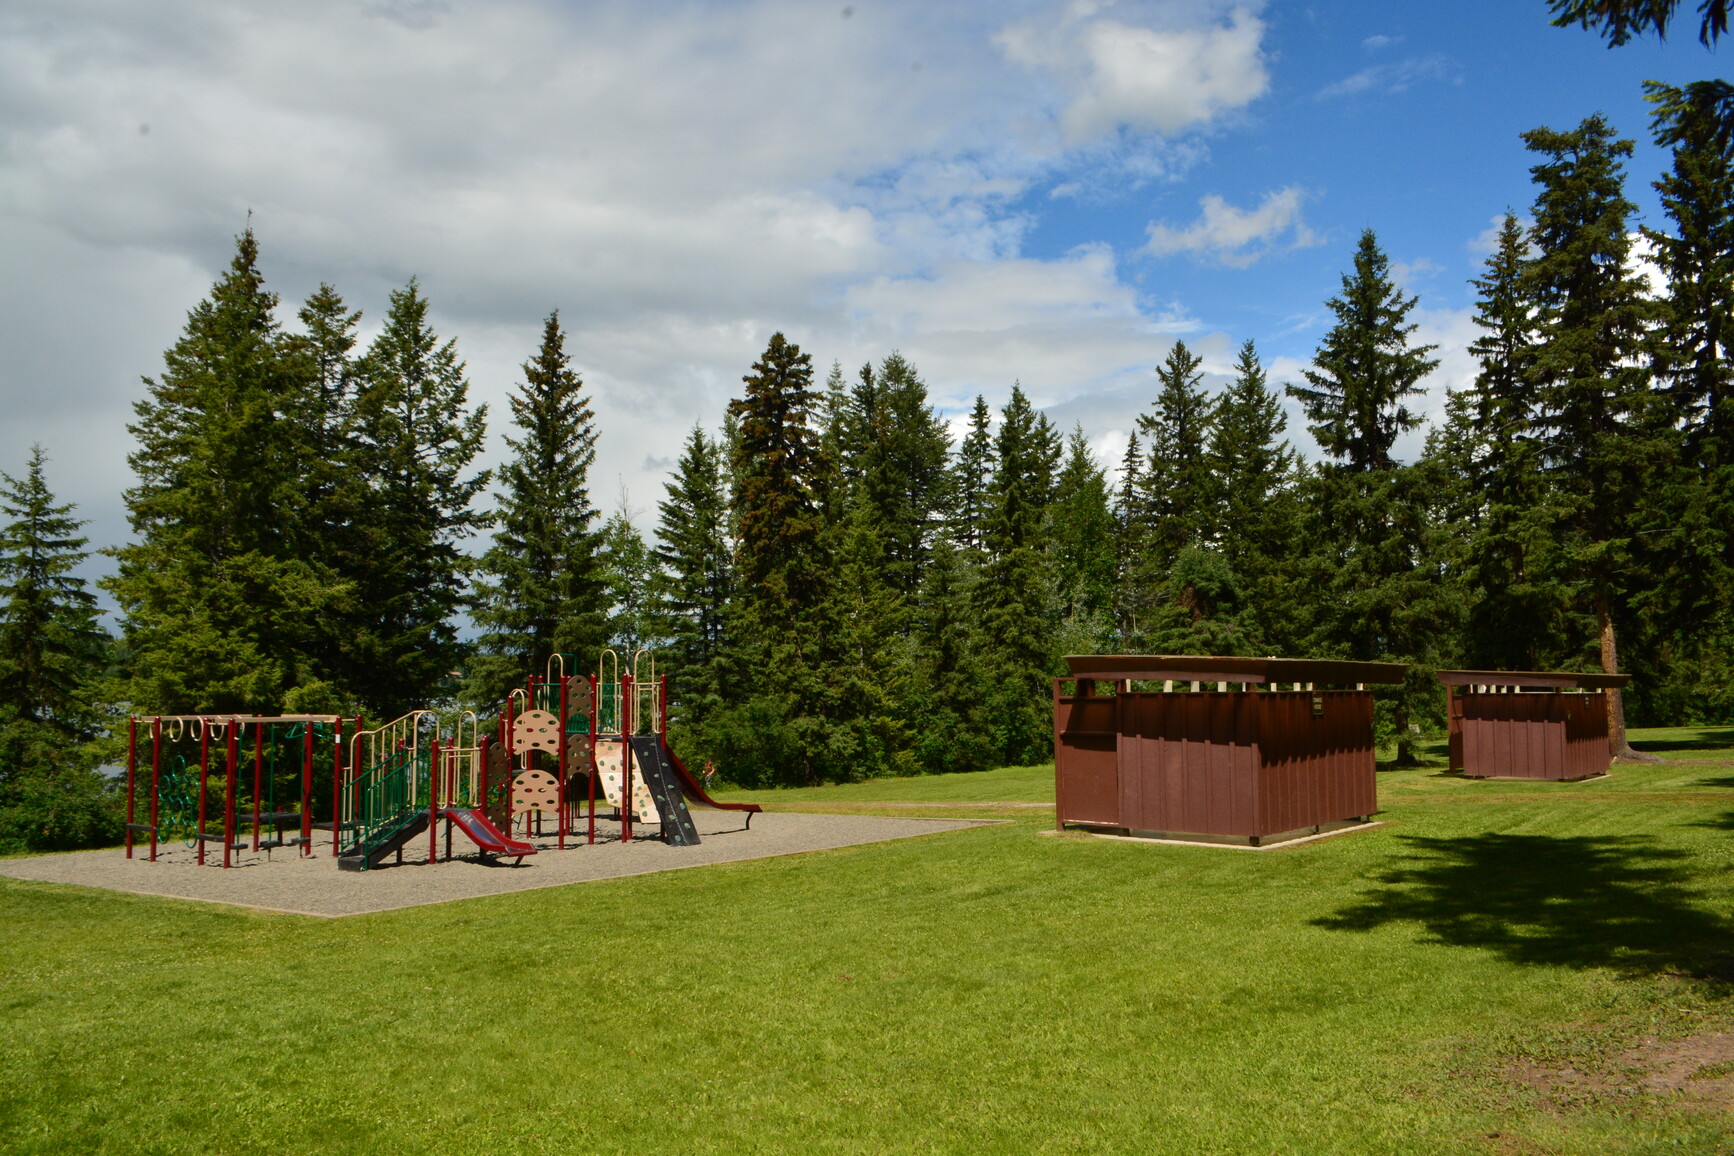 Playground and washroom facilities at Ten Mile Lake Park.